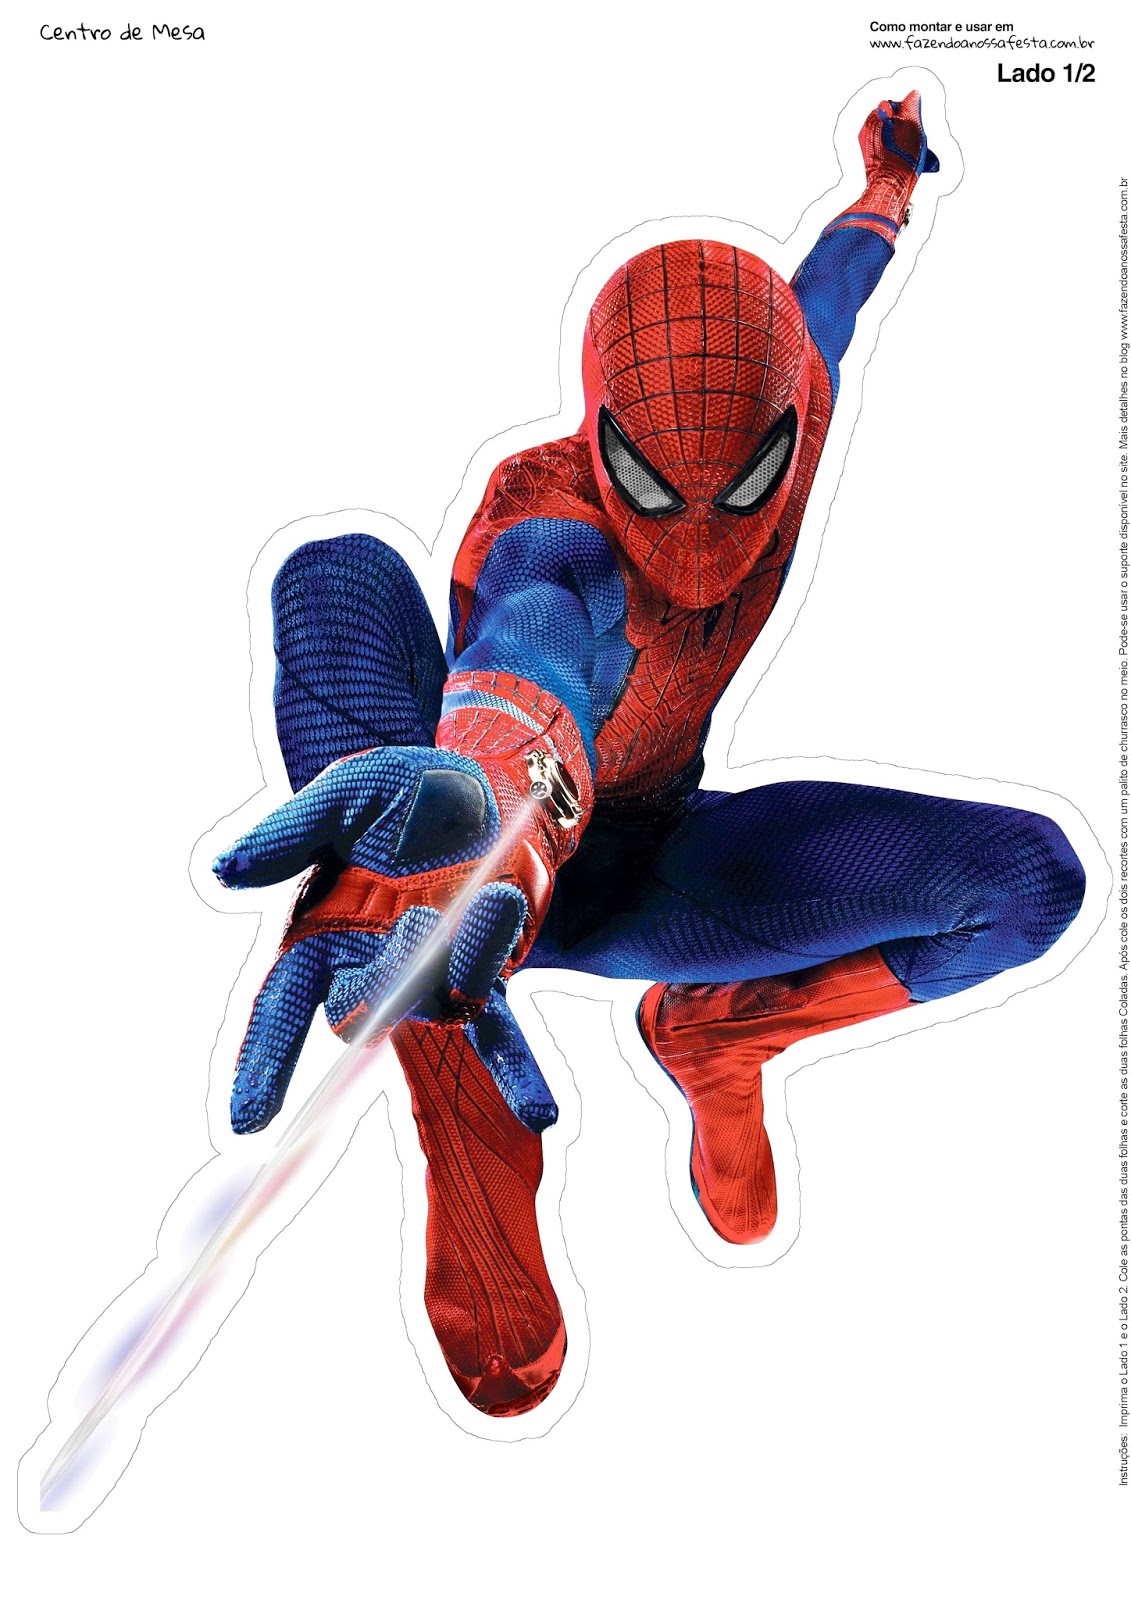 Spiderman: Free Printable Centerpiece. - Oh My Fiesta! for Geeks